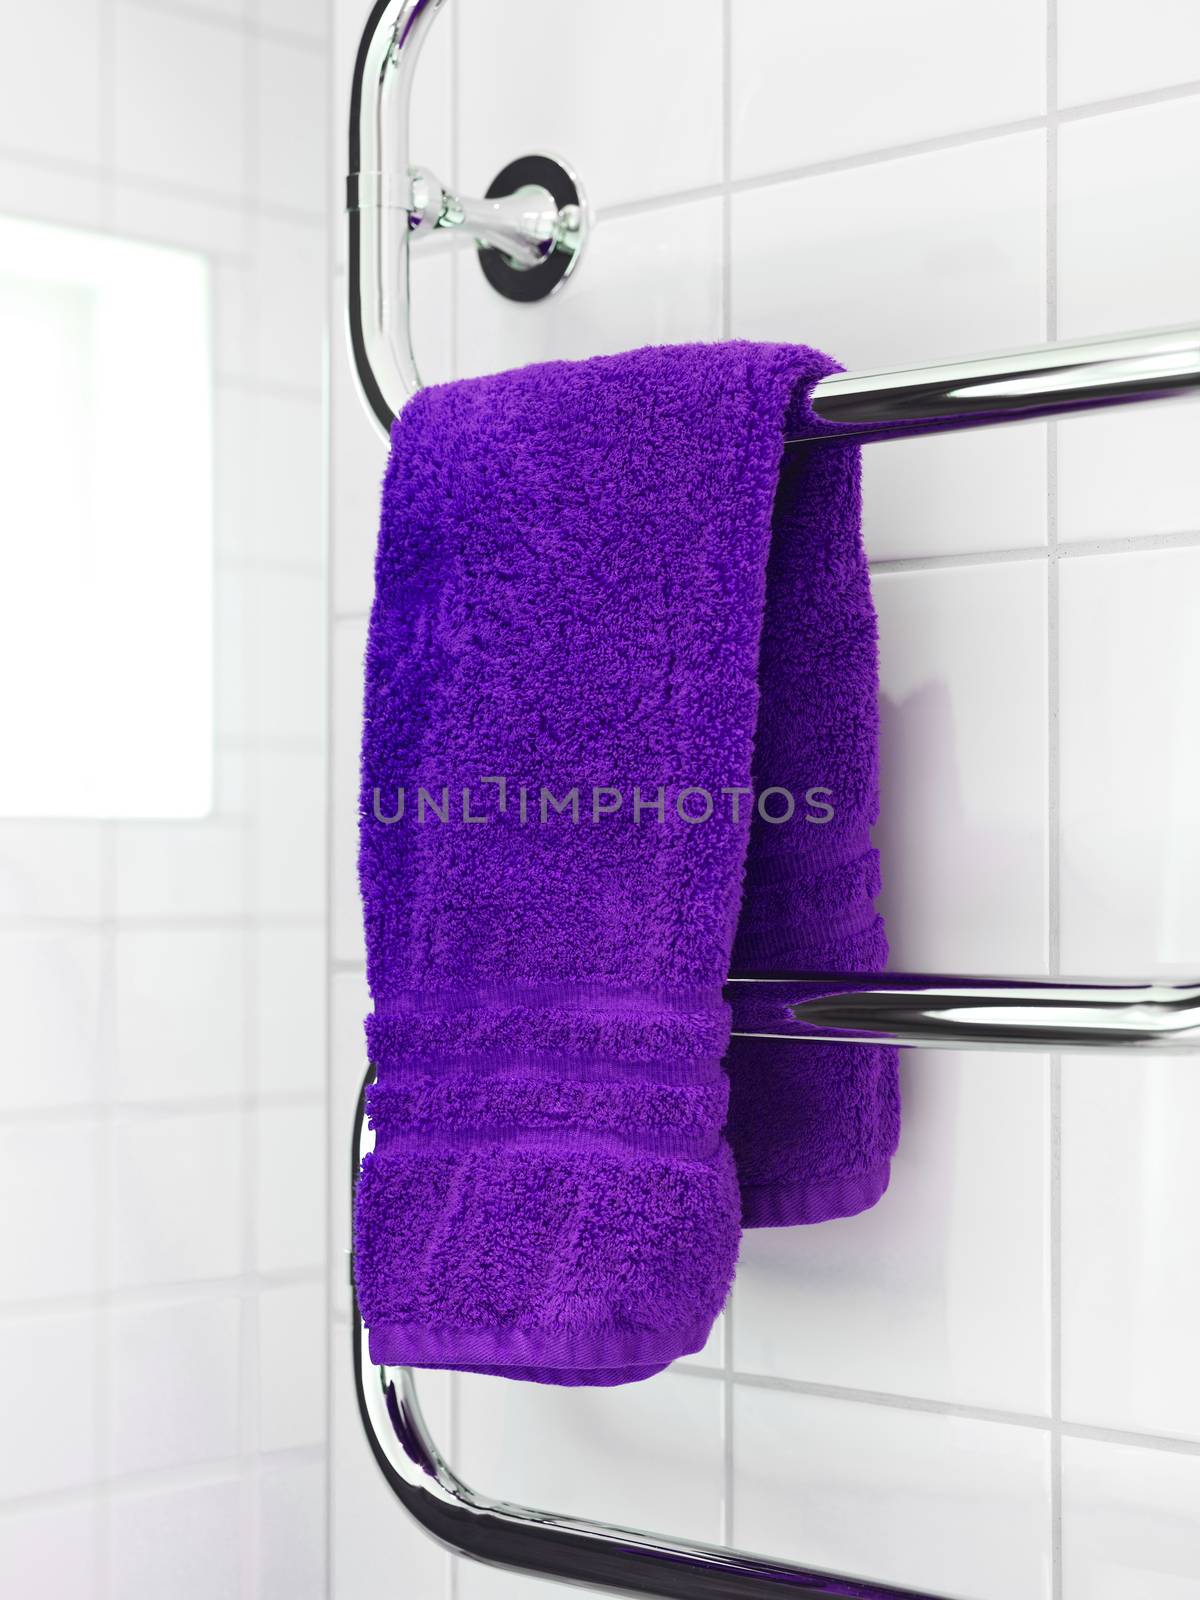 Purple towel on a dryer by gemenacom